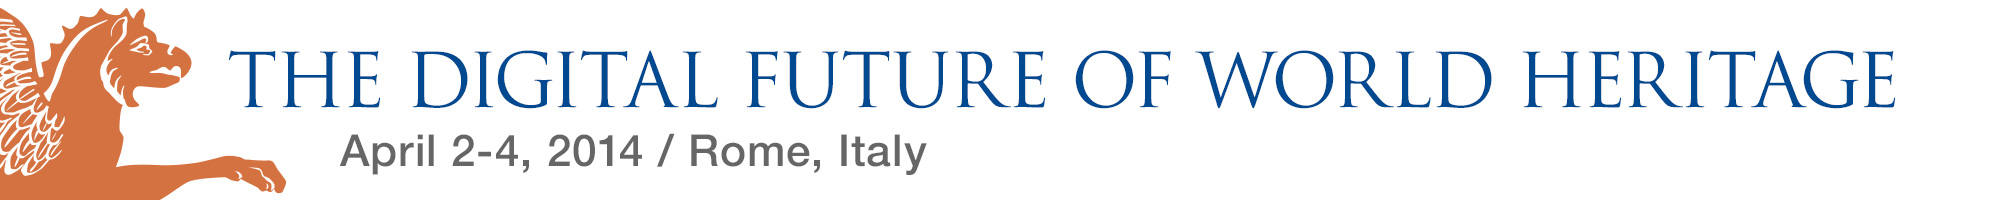 Digital Future of World Heritage Symposium logo